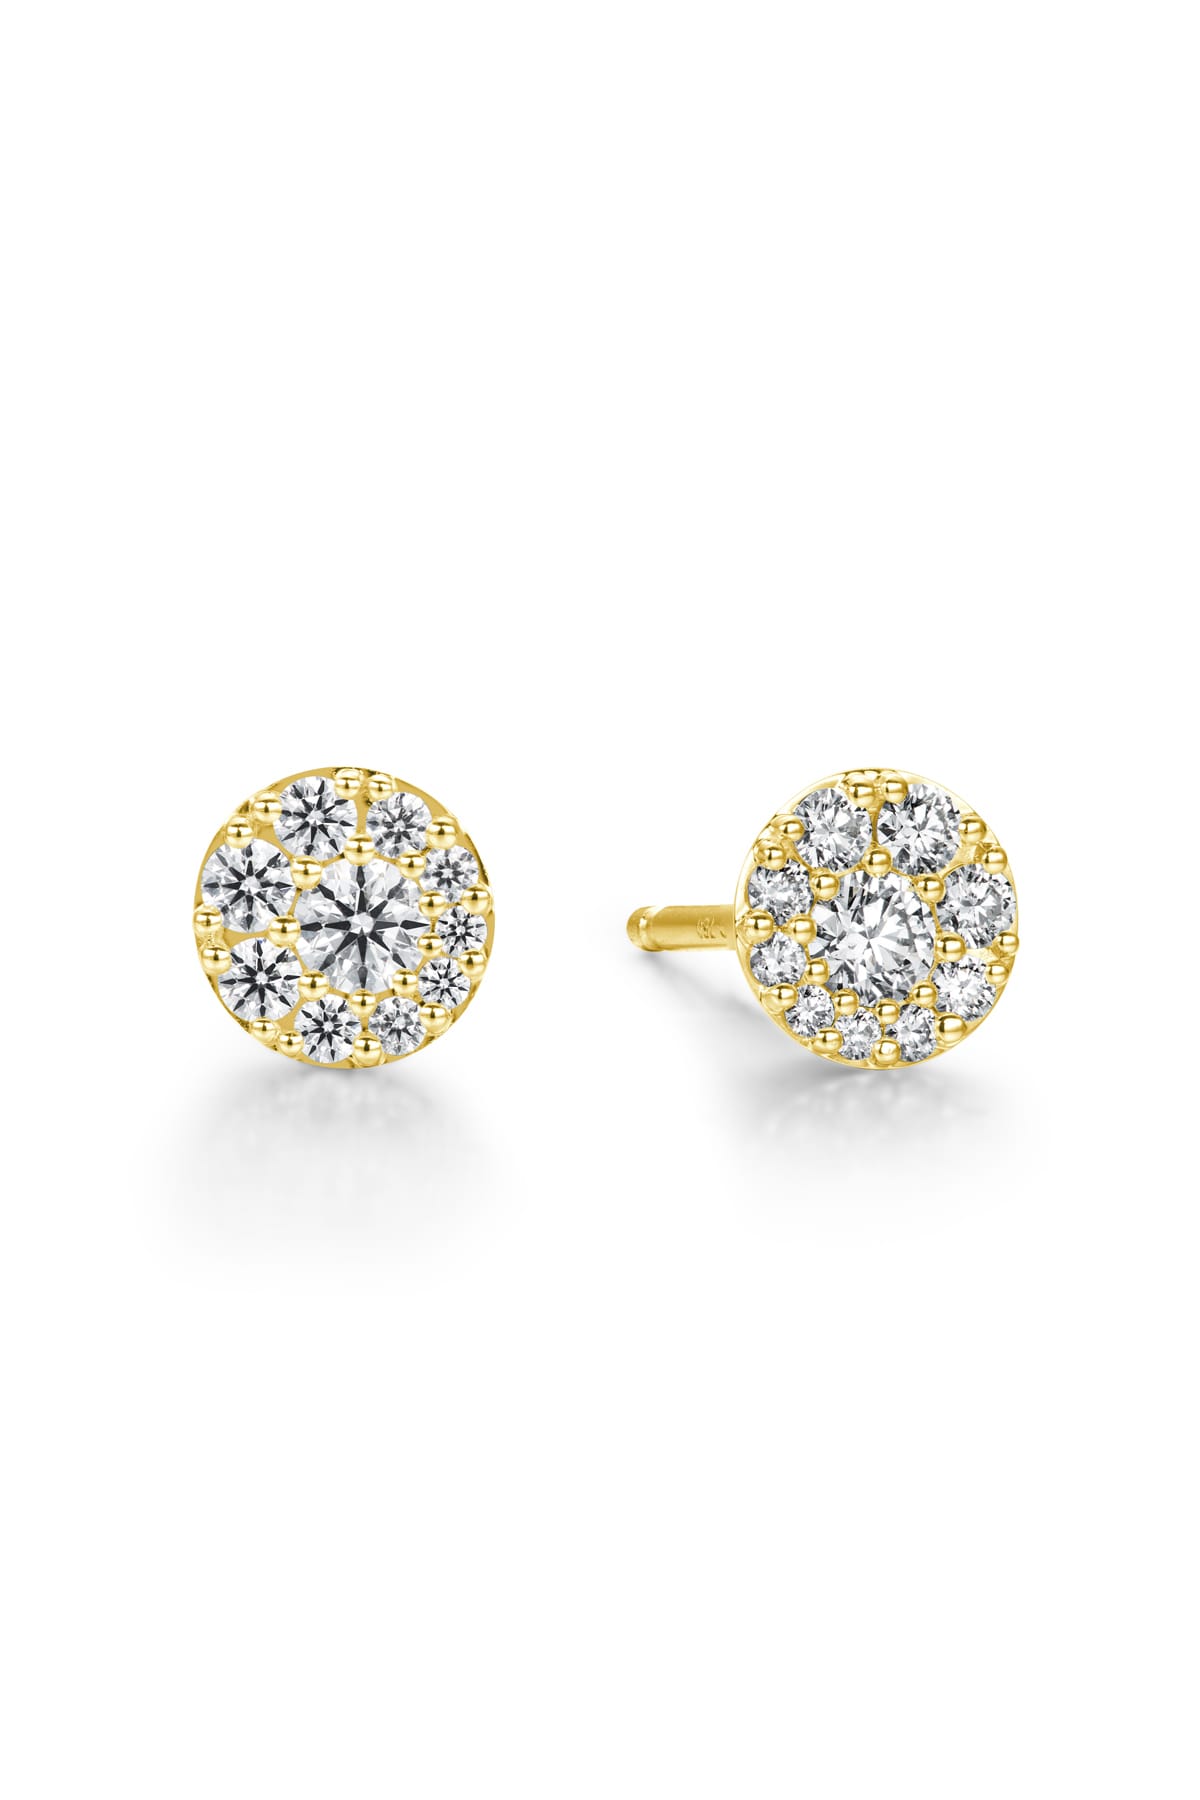 Tessa Diamond Circle Earrings From Hearts On Fire available at LeGassick Diamonds and Jewellery Gold Coast, Australia.